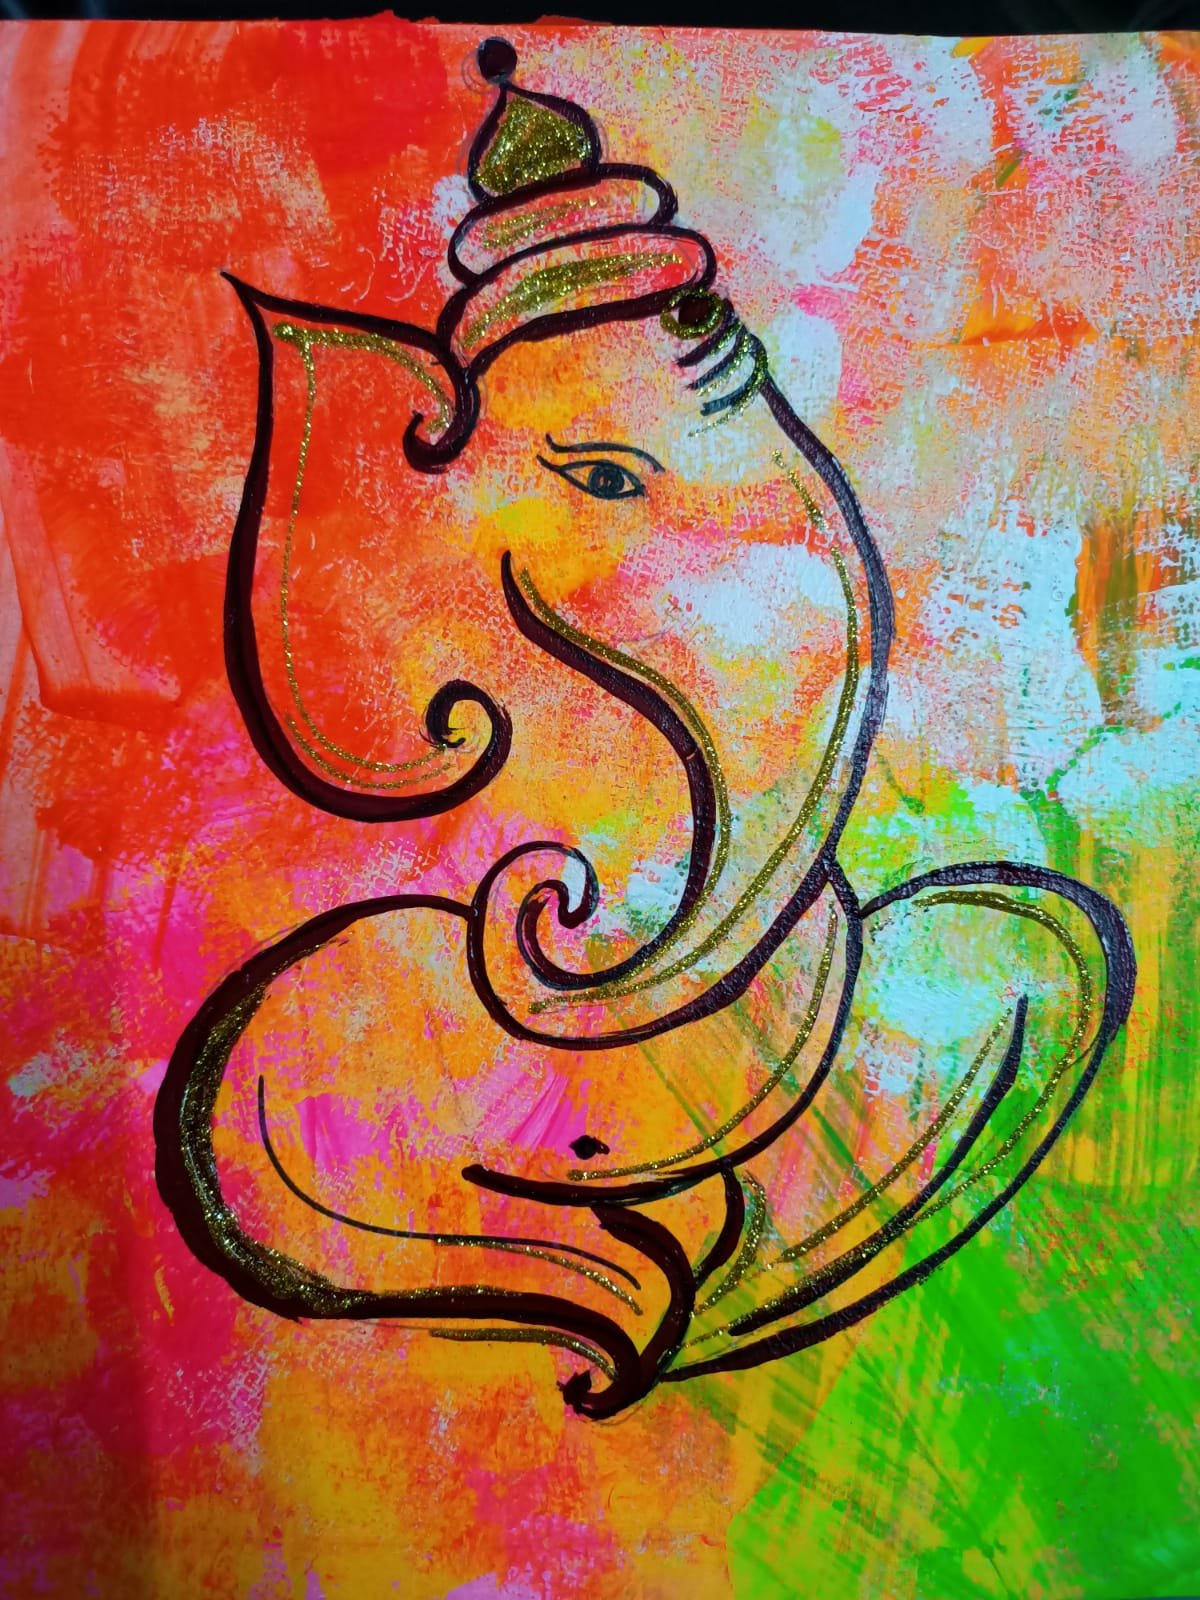 ganesha drawing step by step for beginners / simple ganesh drawing / Ganpati  bappa morya - YouTube